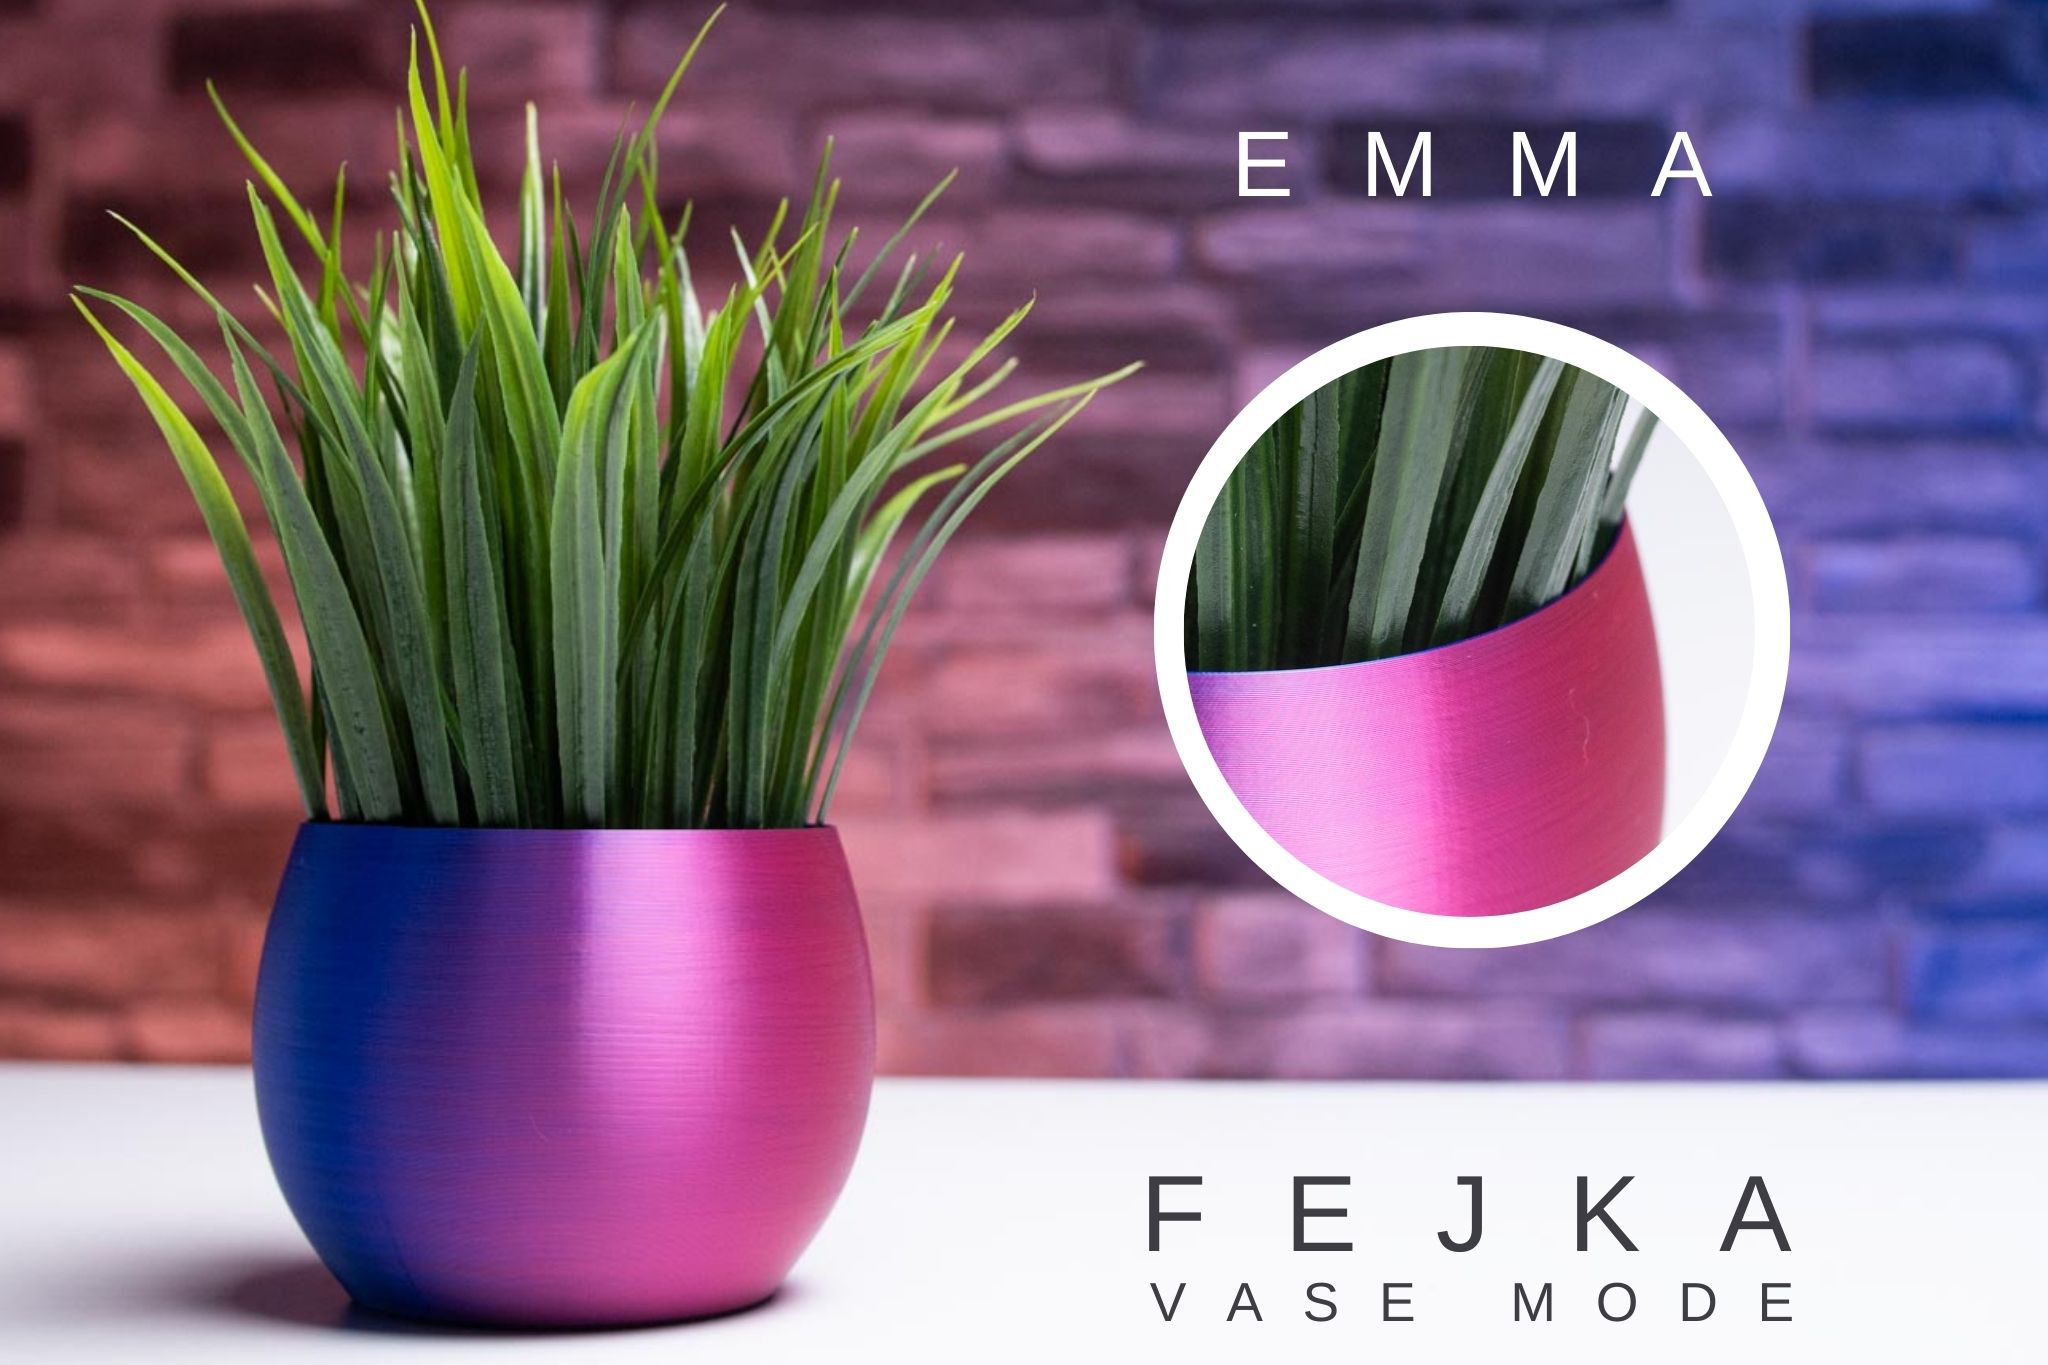 3D Printed Planter and Pot for Ikea Fejka - Vase EMMA